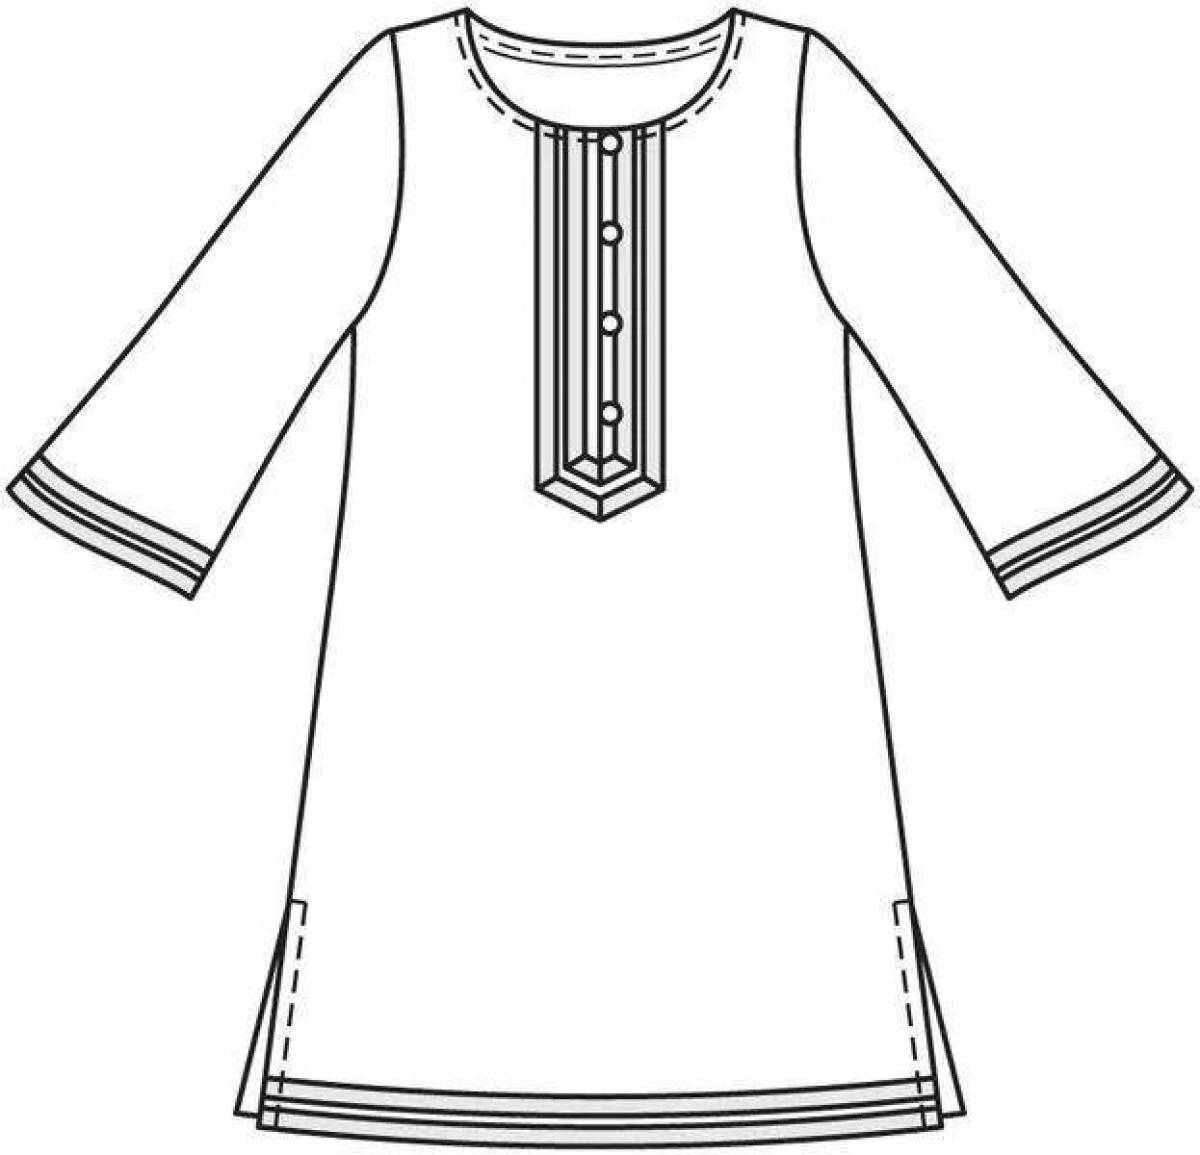 Раскраски русской рубахи и сарафана